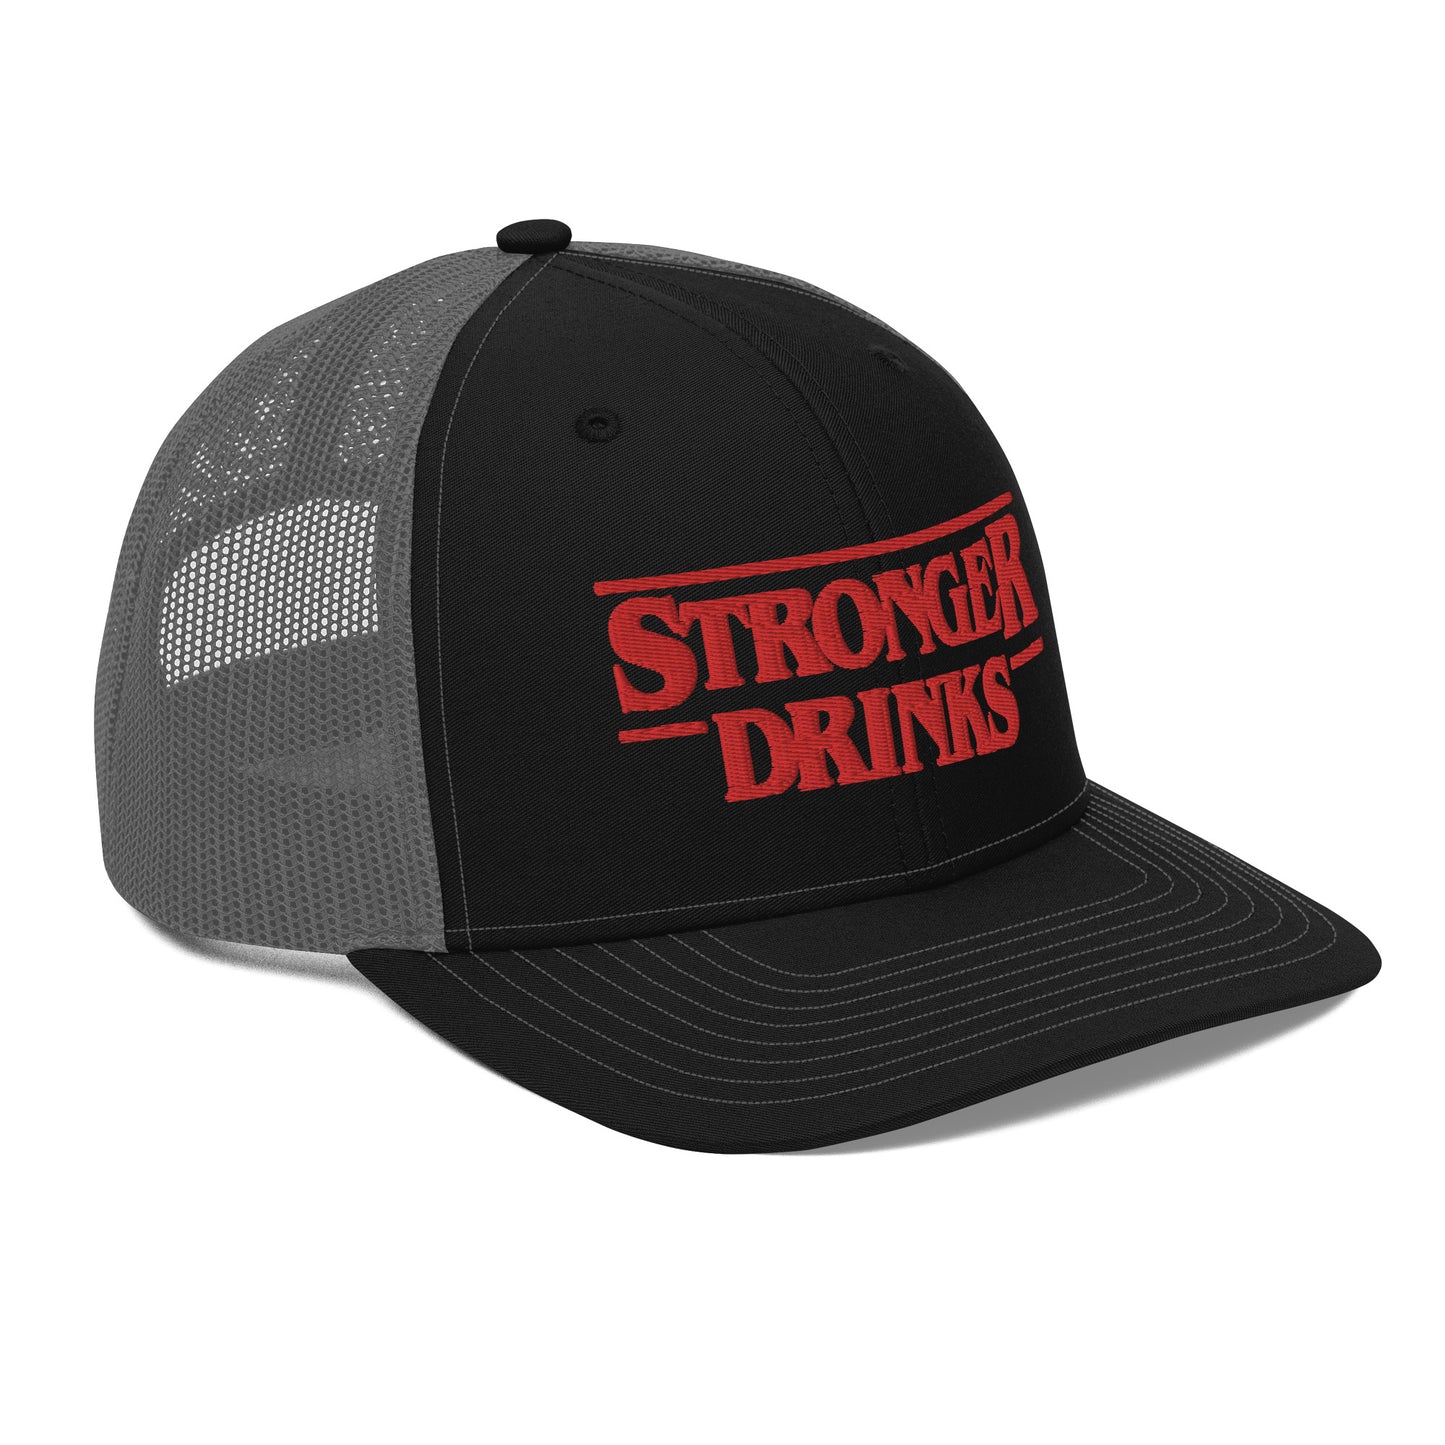 StrongerDrinksTrucker Cap